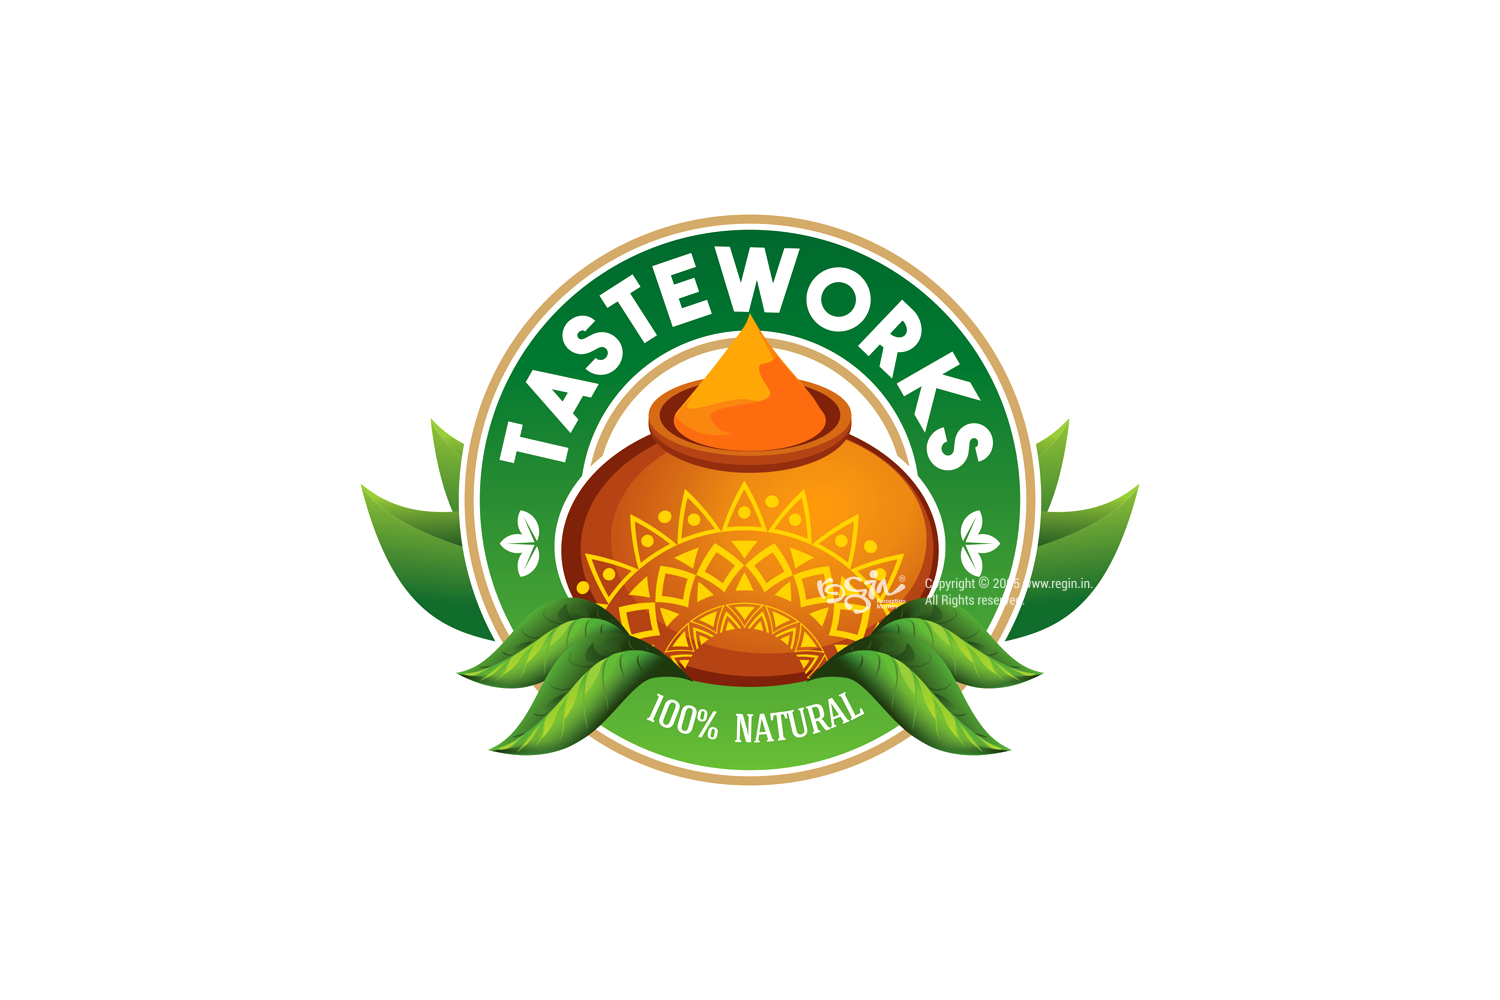 Tasteworks logo